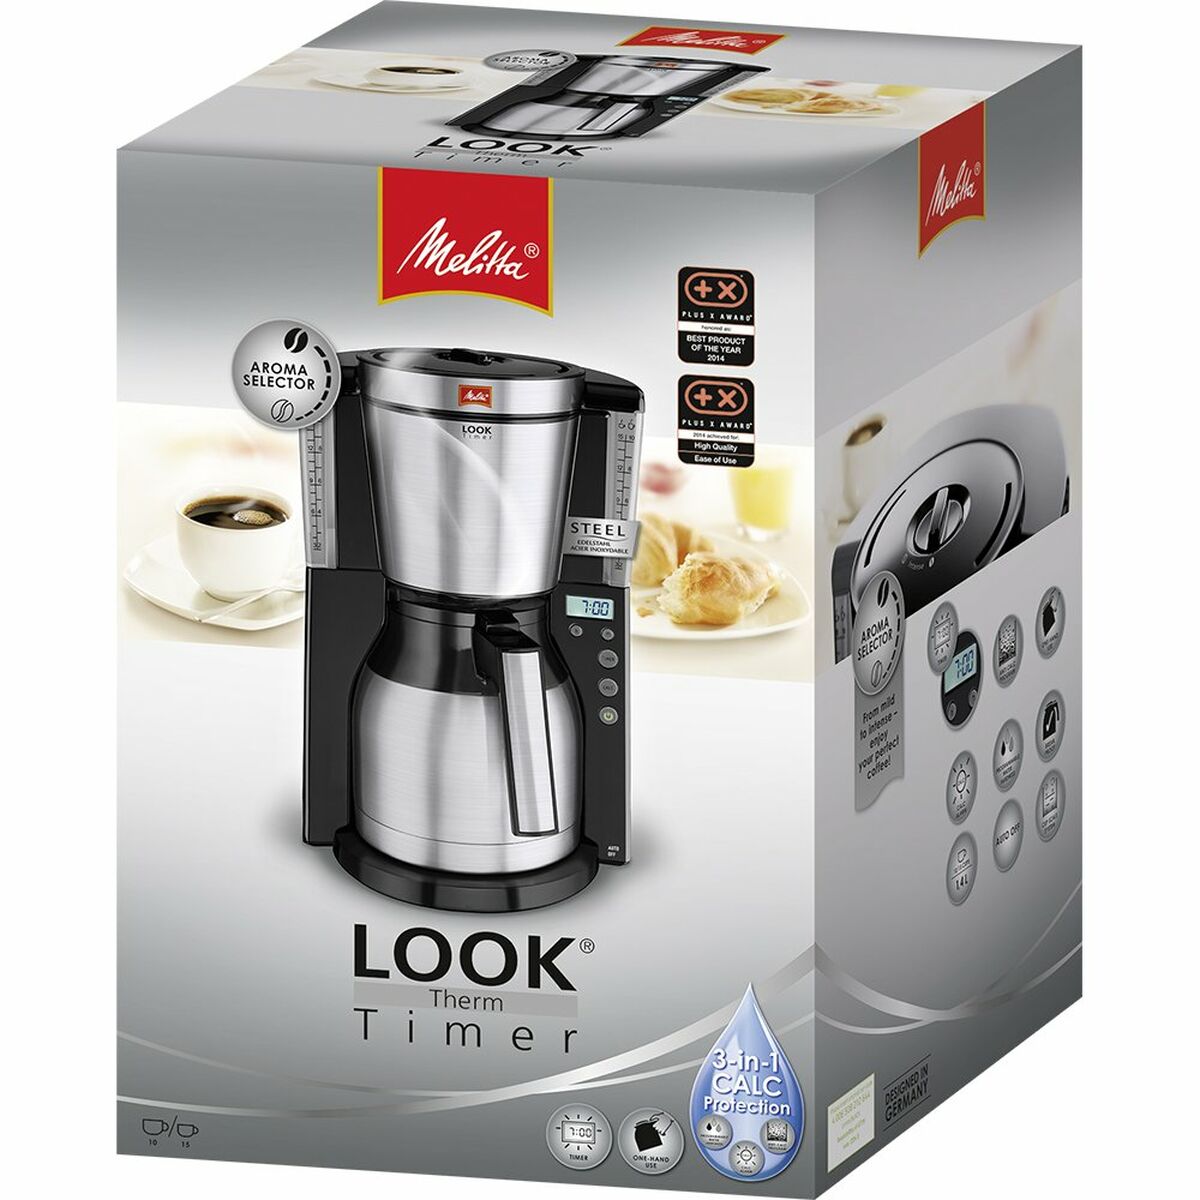 Dryp kaffemaskine melitta 6738044 1000 W 1,4 L